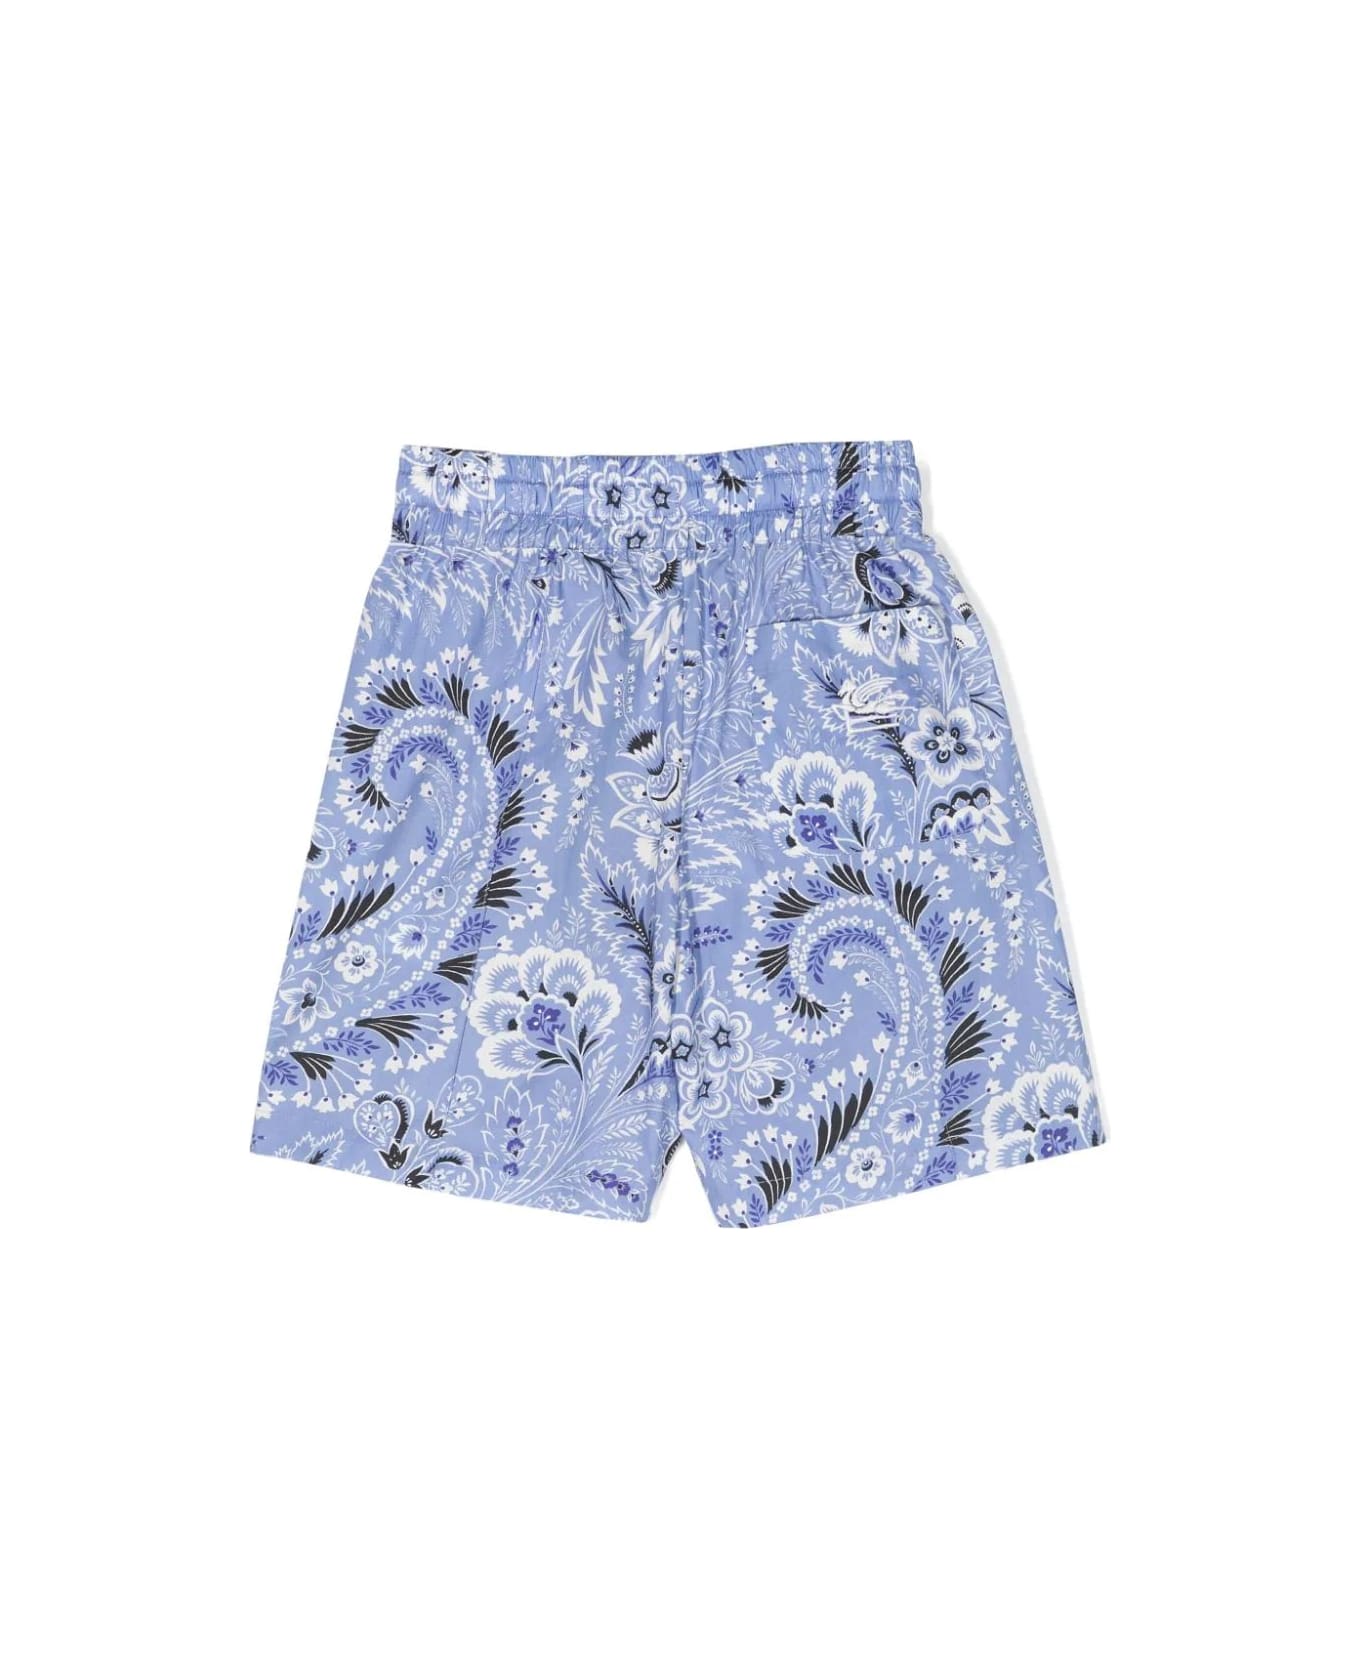 Etro Swim Shorts With Light Blue Paisley Print - Blue